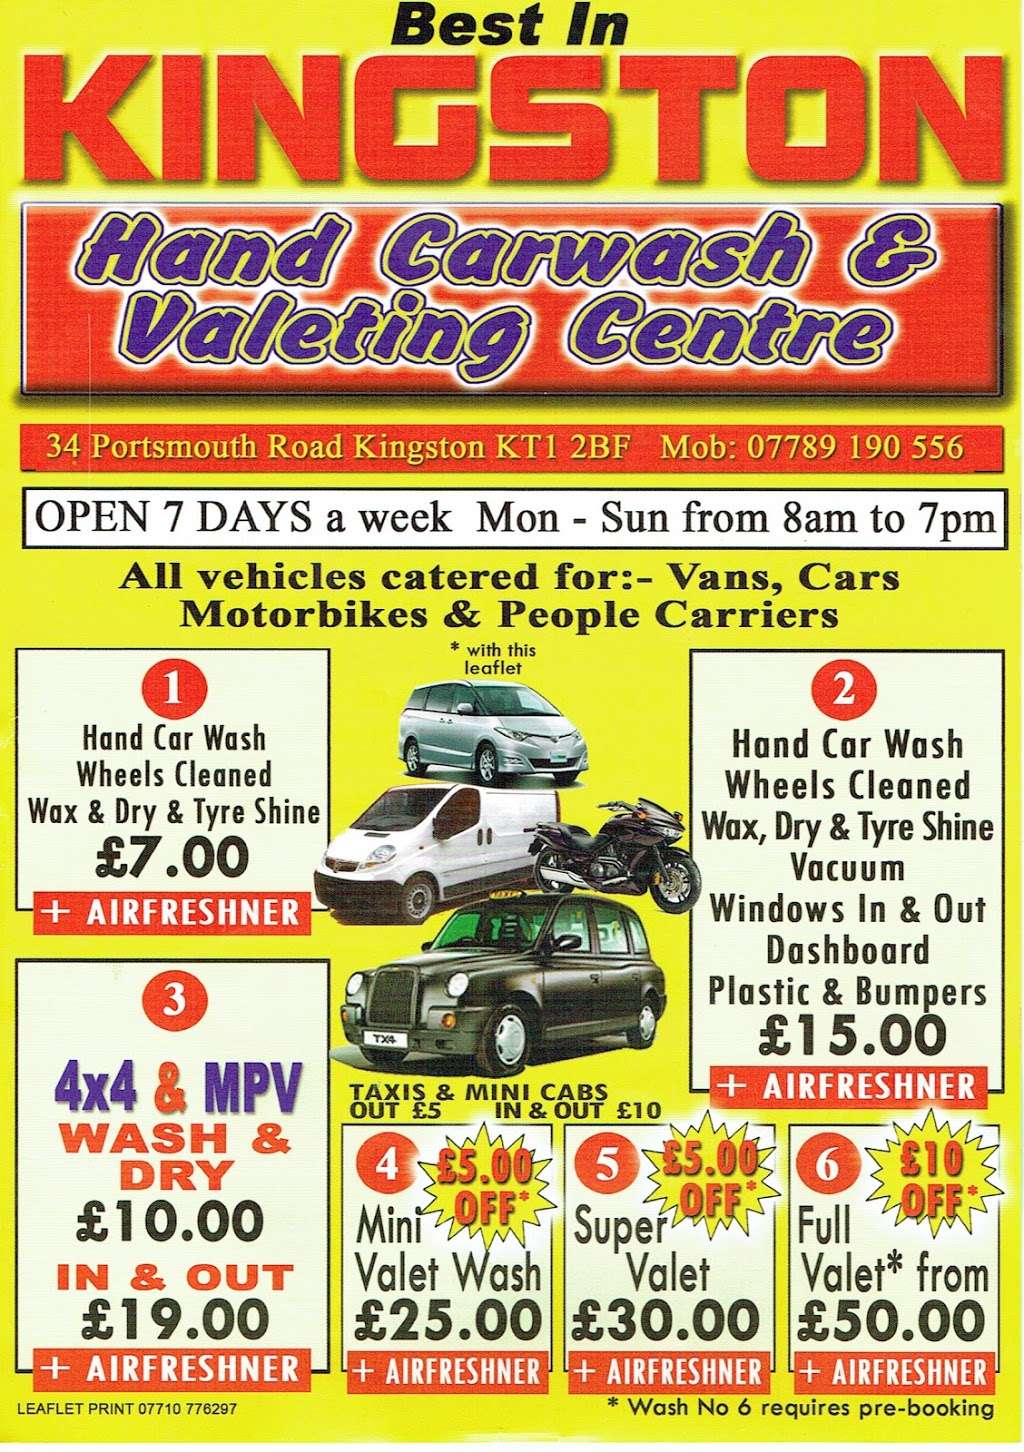 SURBITON CAR WASH - car wash  | Photo 8 of 9 | Address: 34 Portsmouth Rd, Kingston upon Thames, Surbiton KT1 2BF, UK | Phone: 07789 190556